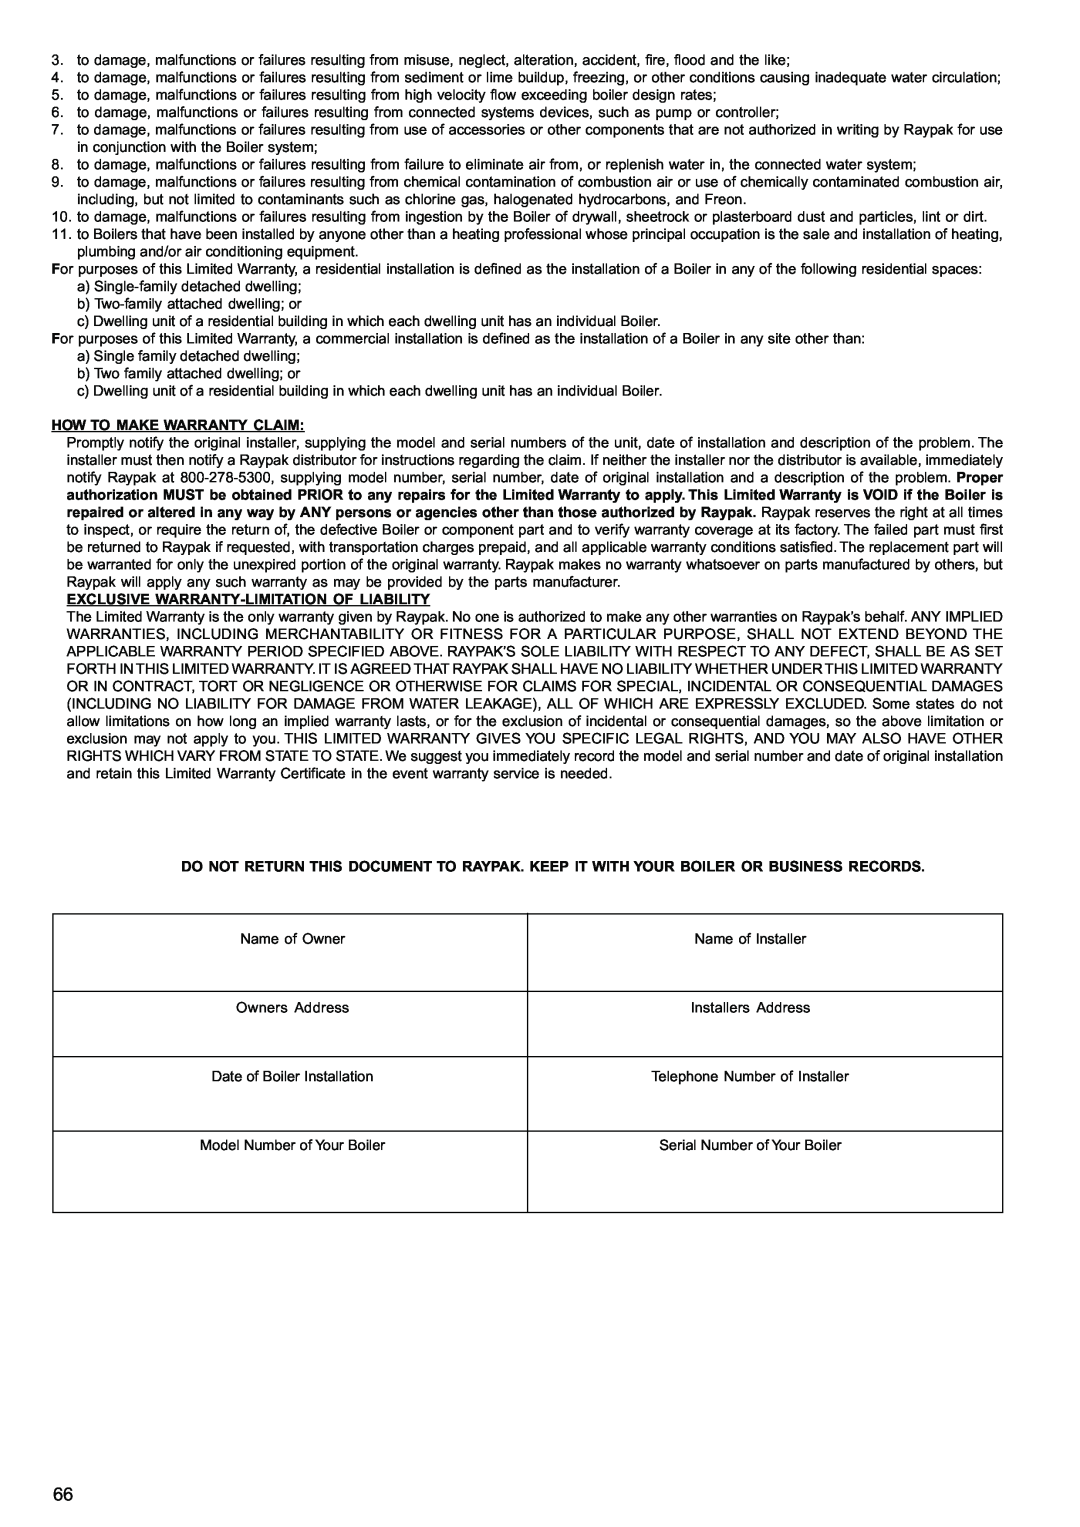 Raypak 85, 120 manual How To Make Warranty Claim, Exclusive Warranty-Limitationof Liability 